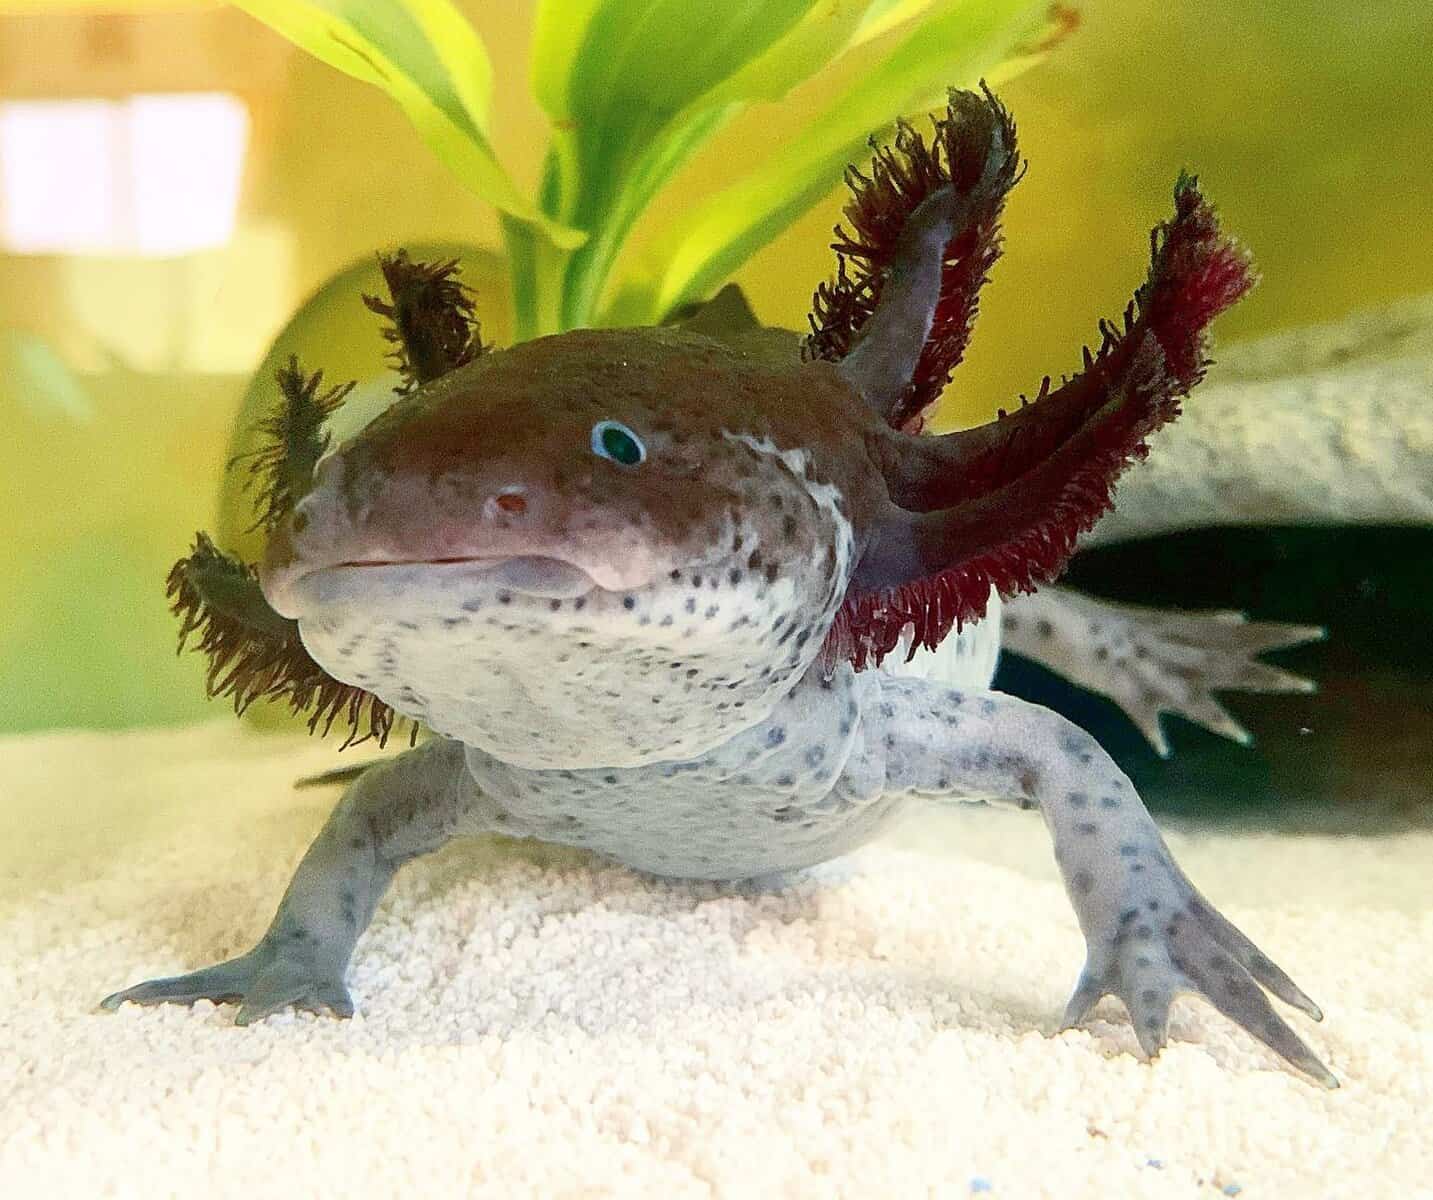 Owning an Axolotl